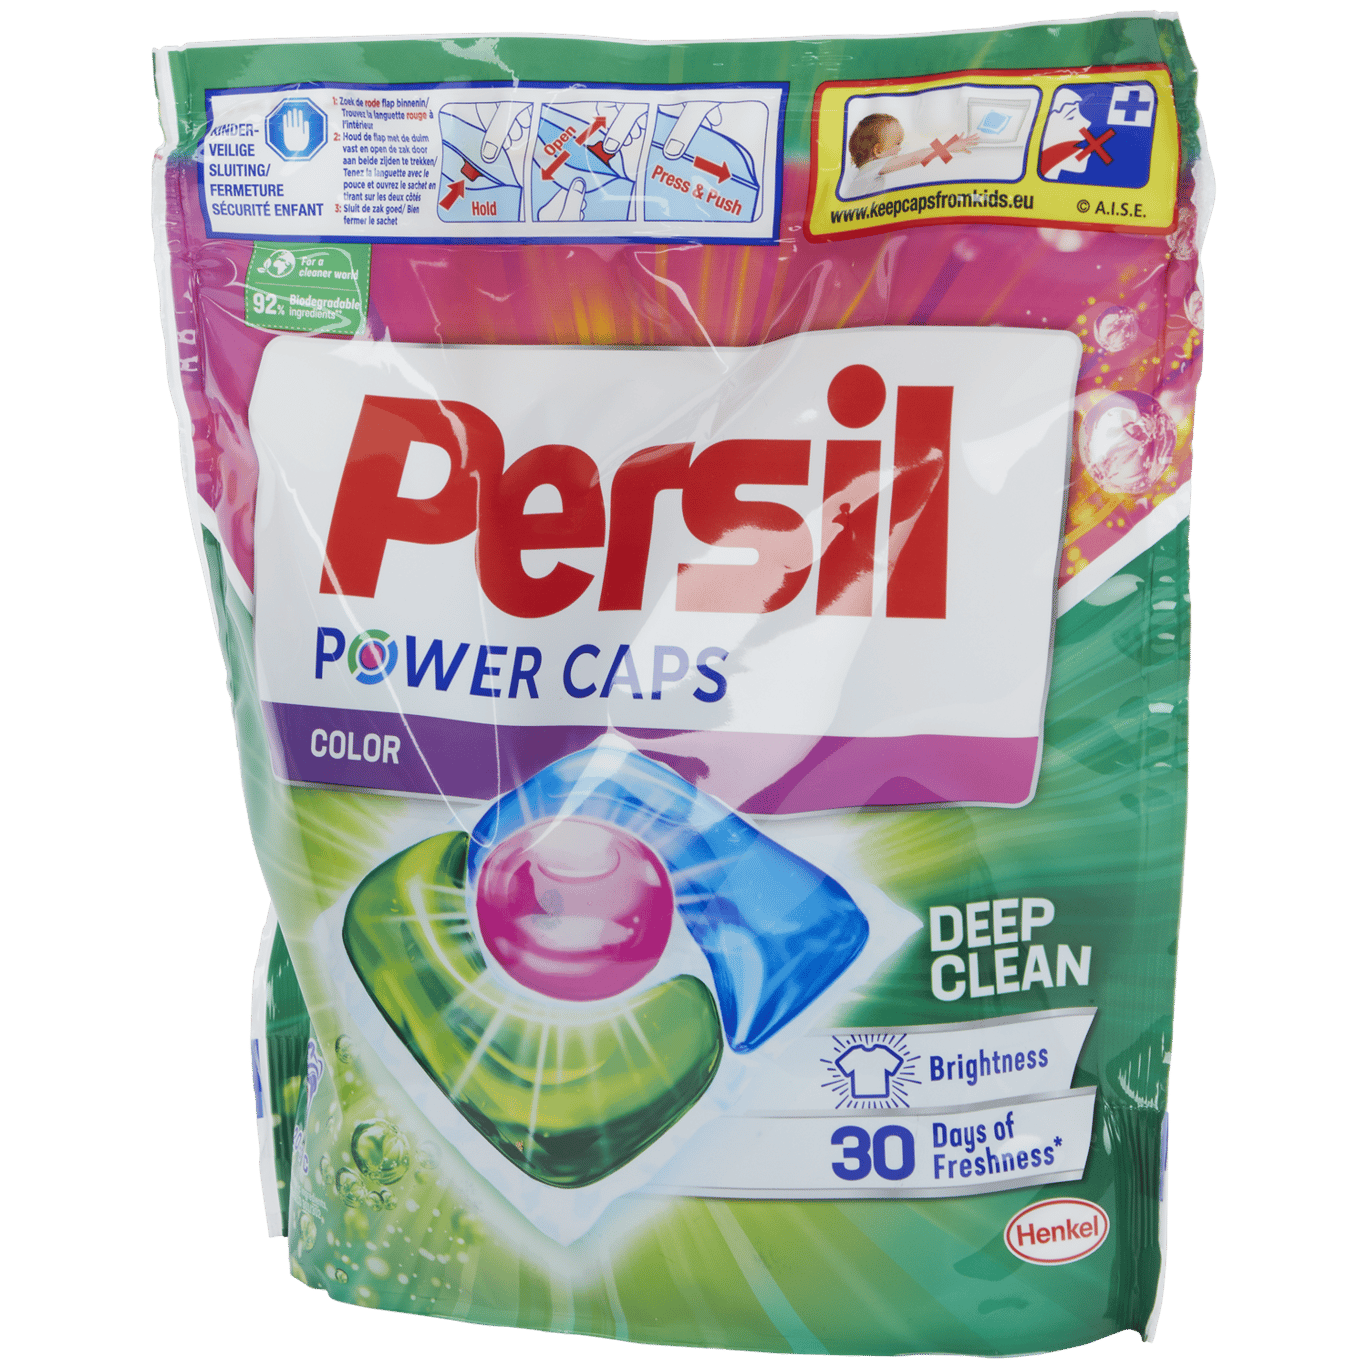 Persil Power Caps Color